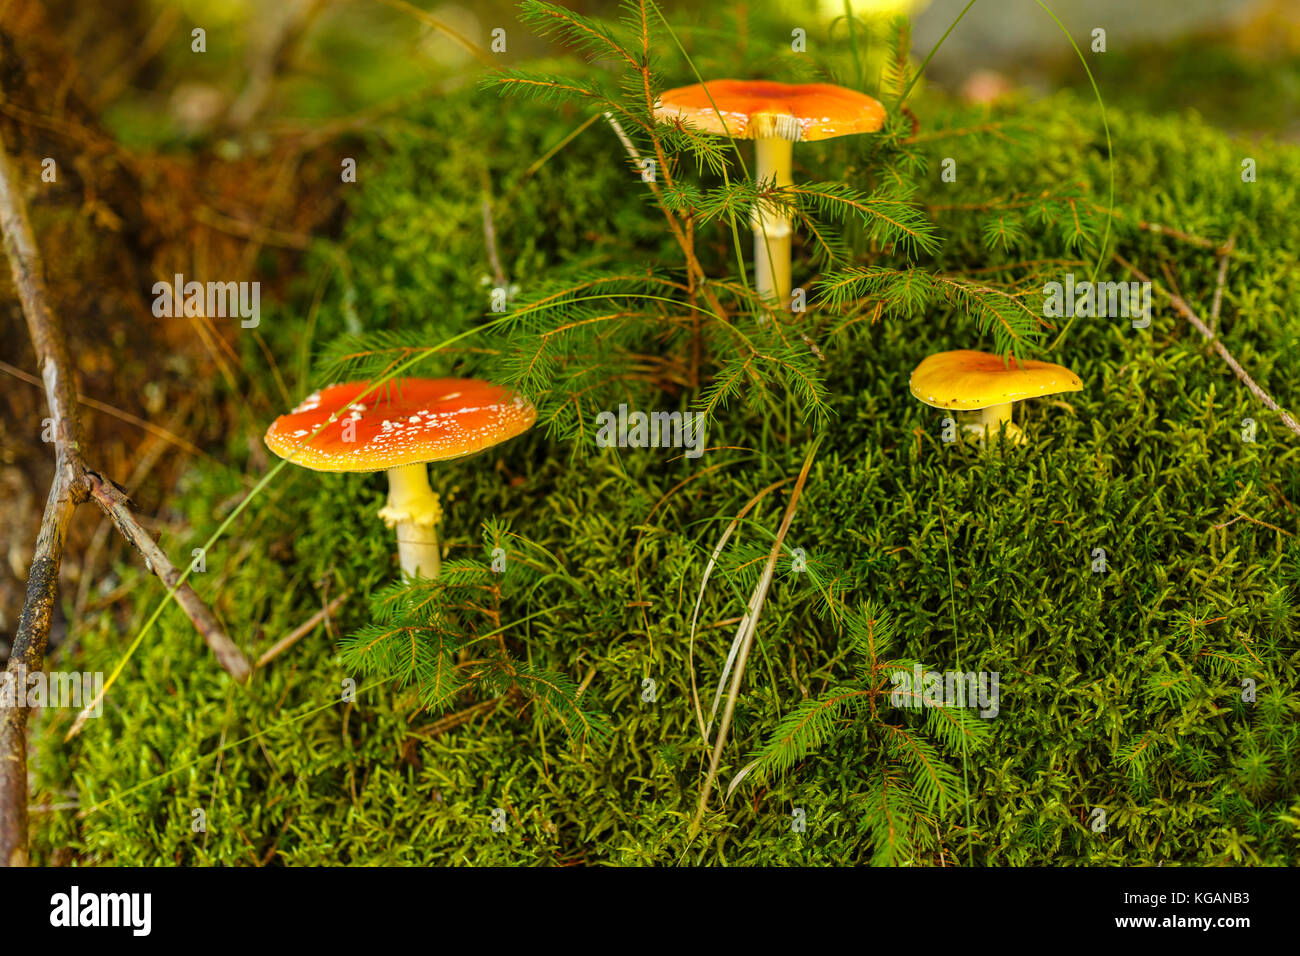 Toxic and hallucinogen mushroom Amanita muscaria in closeup Stock Photo